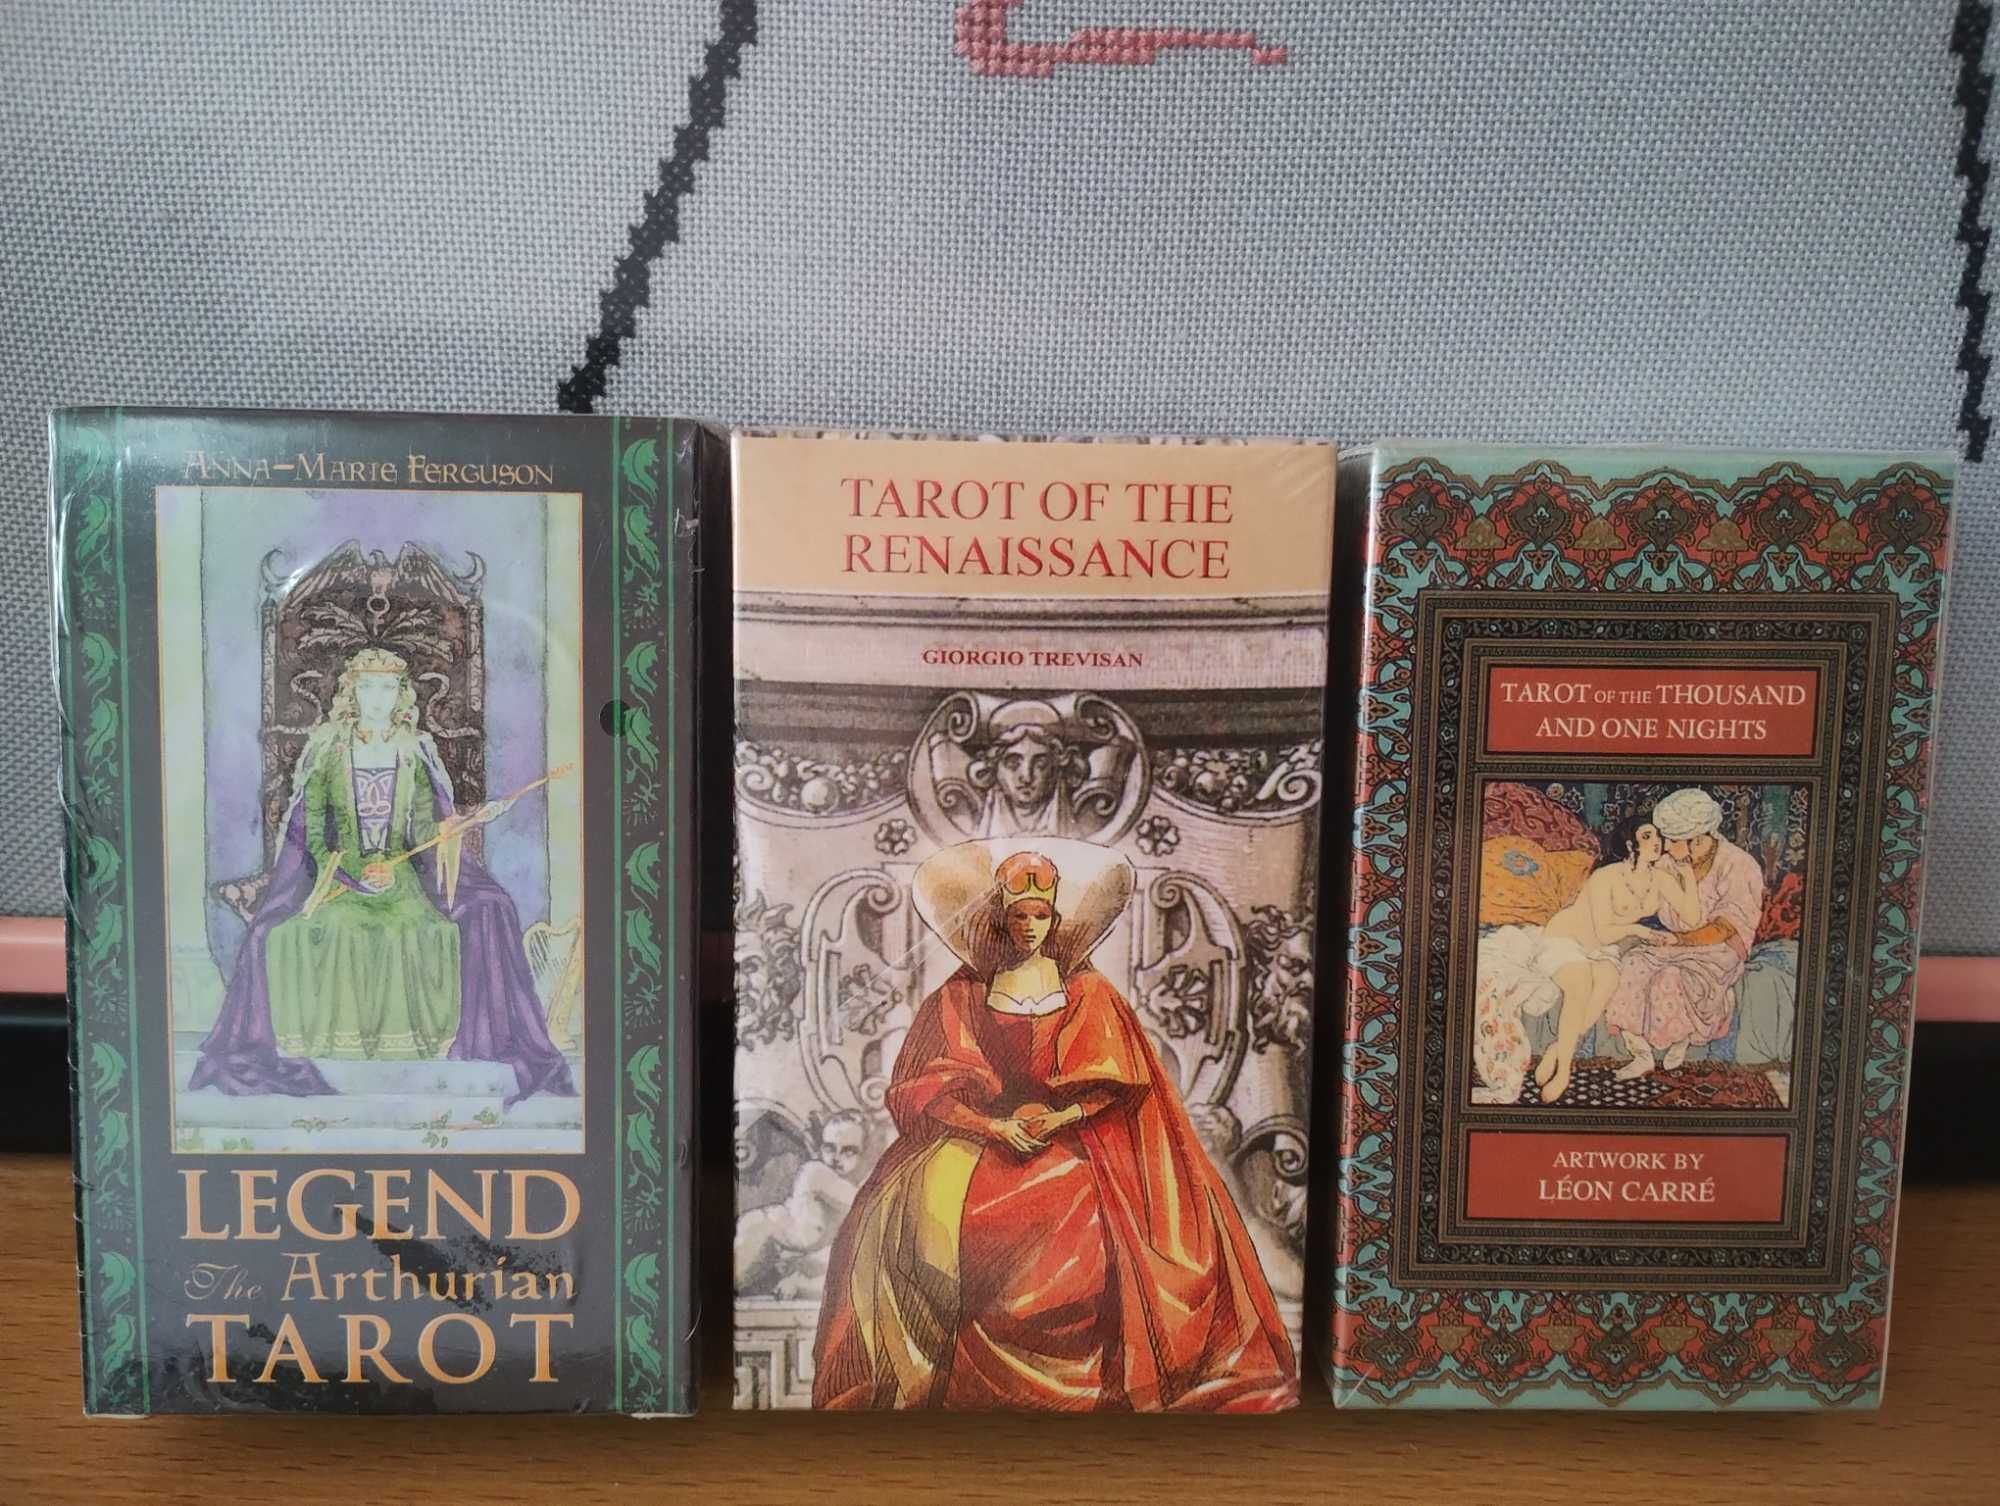 Tarot of 1001 Nights&Legend the Arthurian Tarot&Tarot of Renaissance